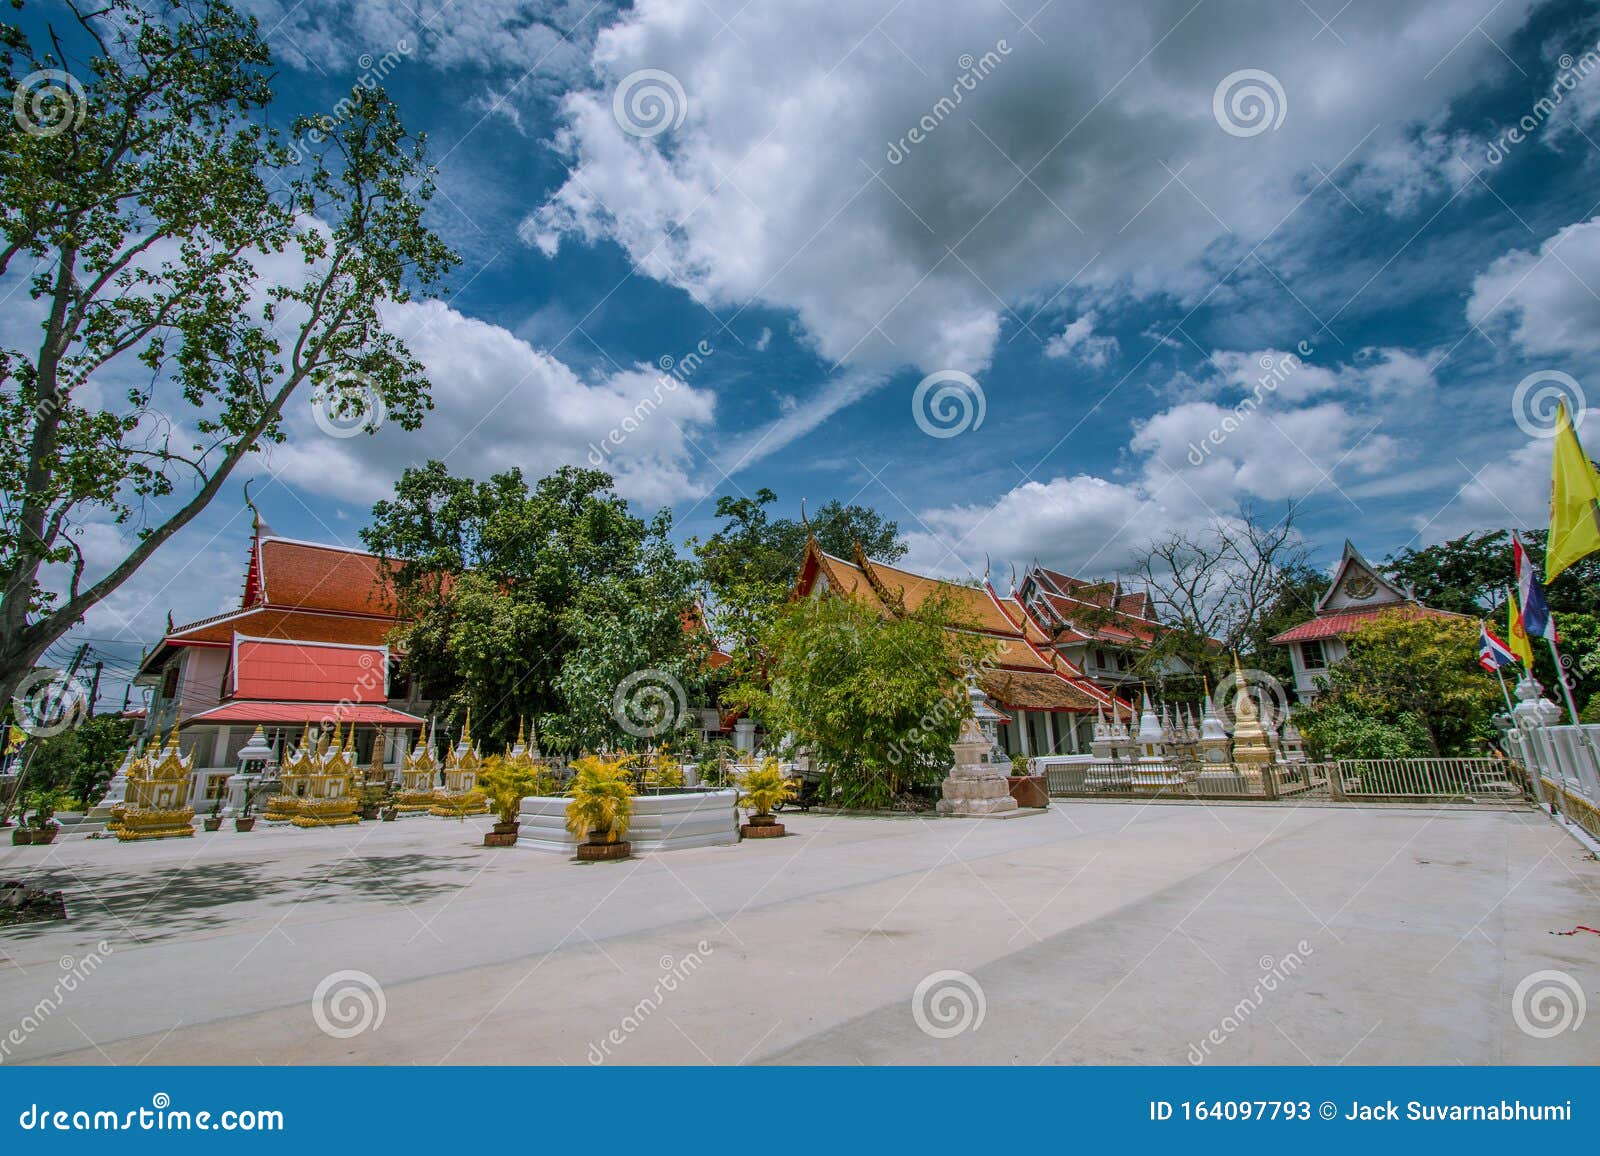 Wat Khian Khet Thanyaburi District Pathum Thani Province Stock Image Image Of Coast Home